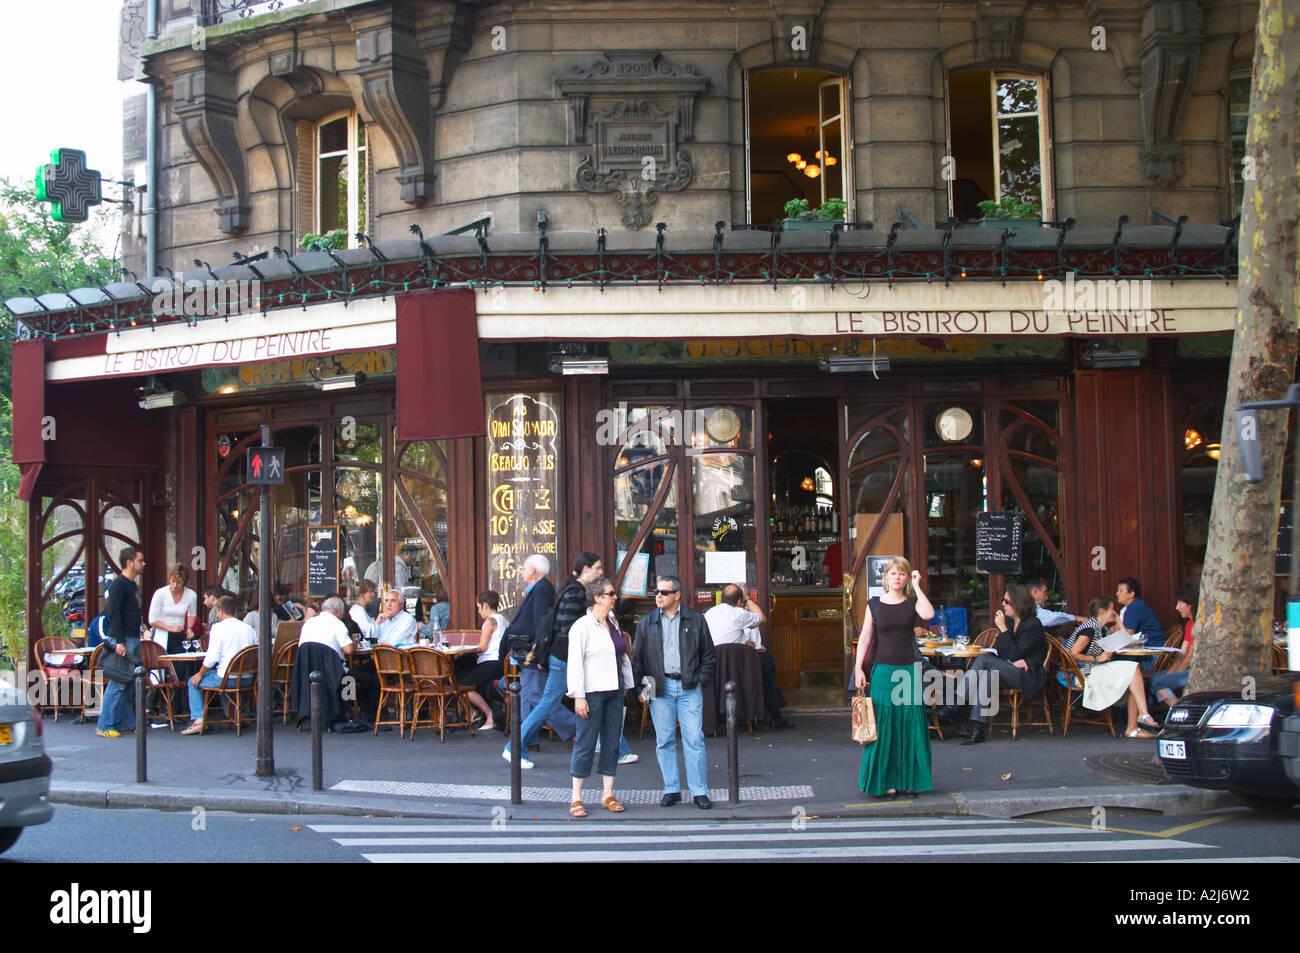 Le Bistrot du Peintre cafe bar terrasse terasse outside seating on the ...